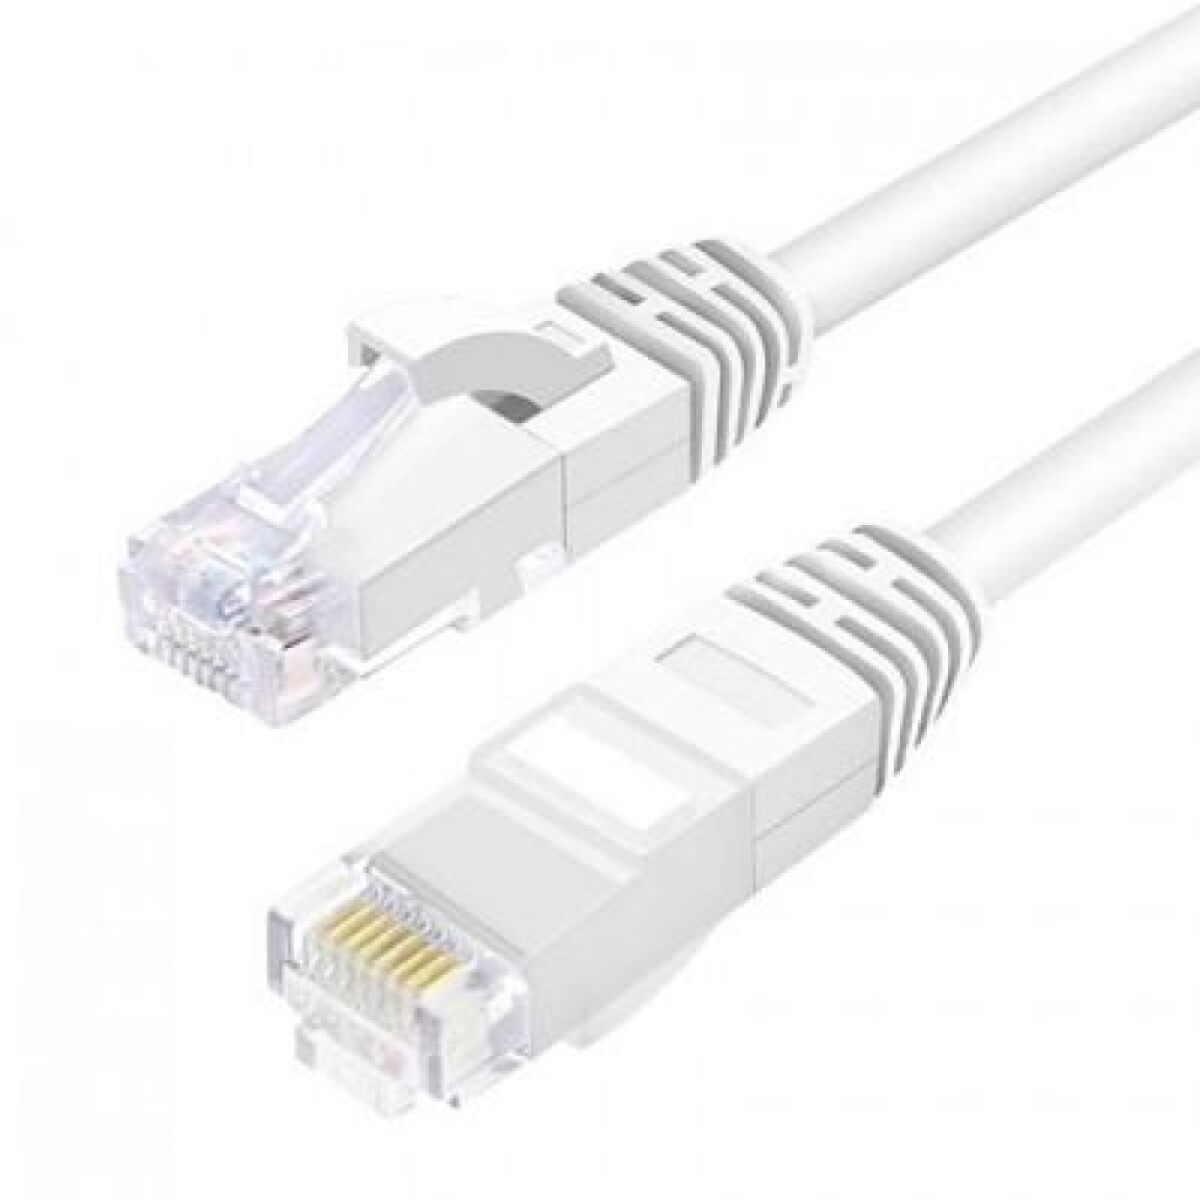 Cable de red LAN Categoria 5e - 3 metros de largo 